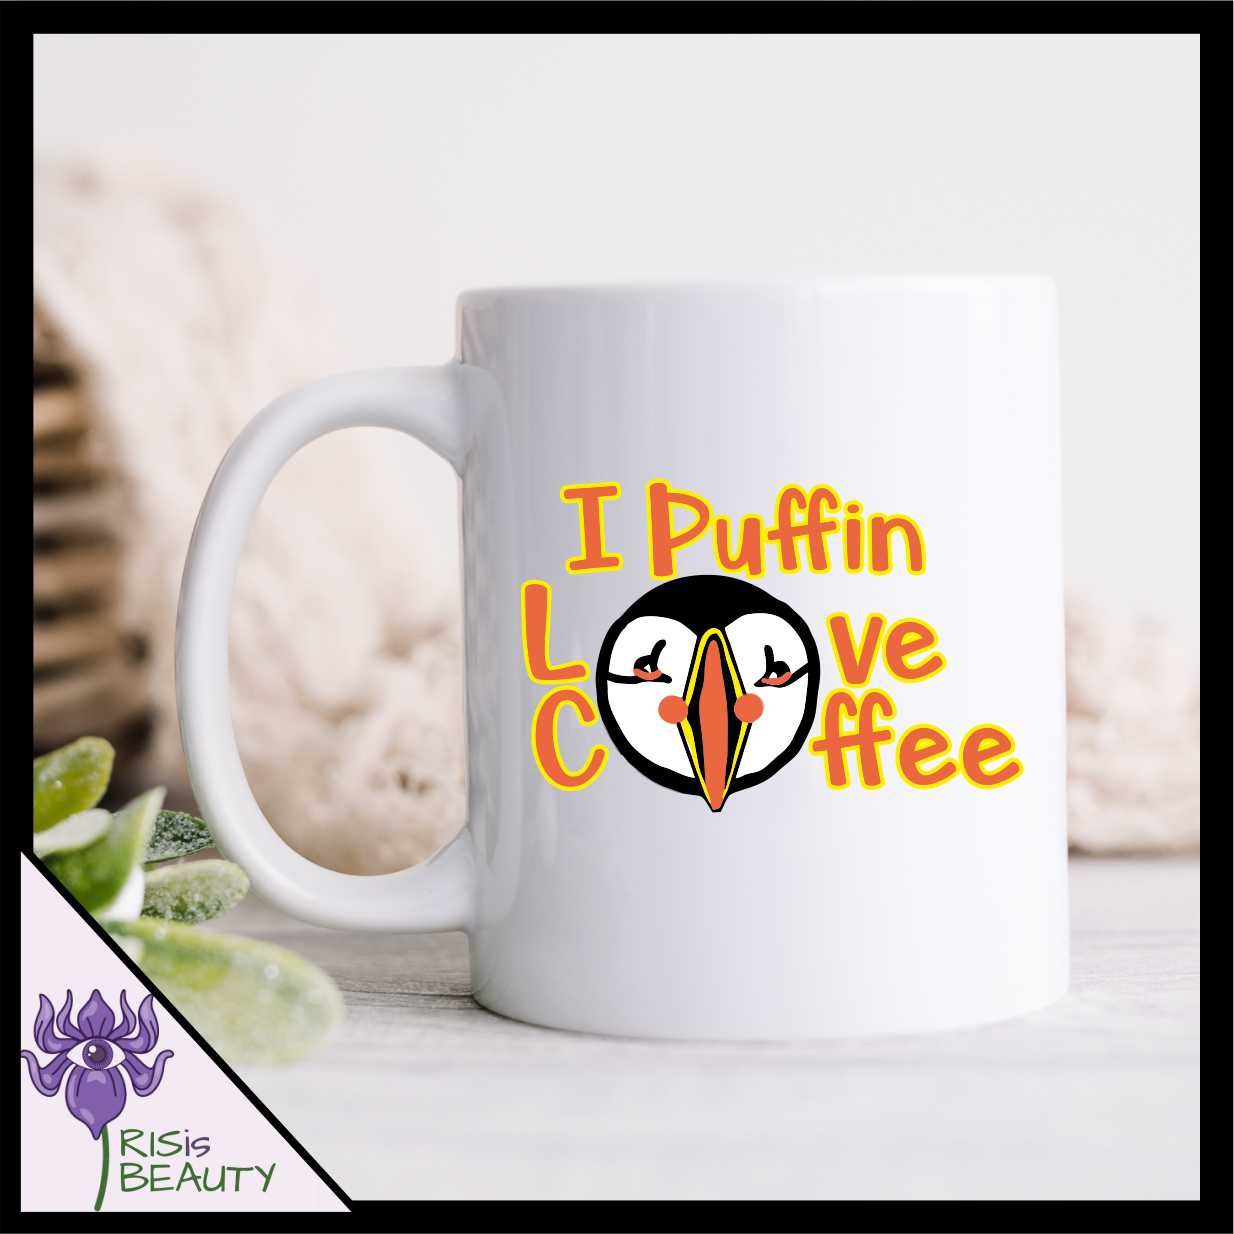 I Puffin Love Coffee mug designed by IRISisBEAUTY, coffee mugs, I Love Coffee, Puffin art mug